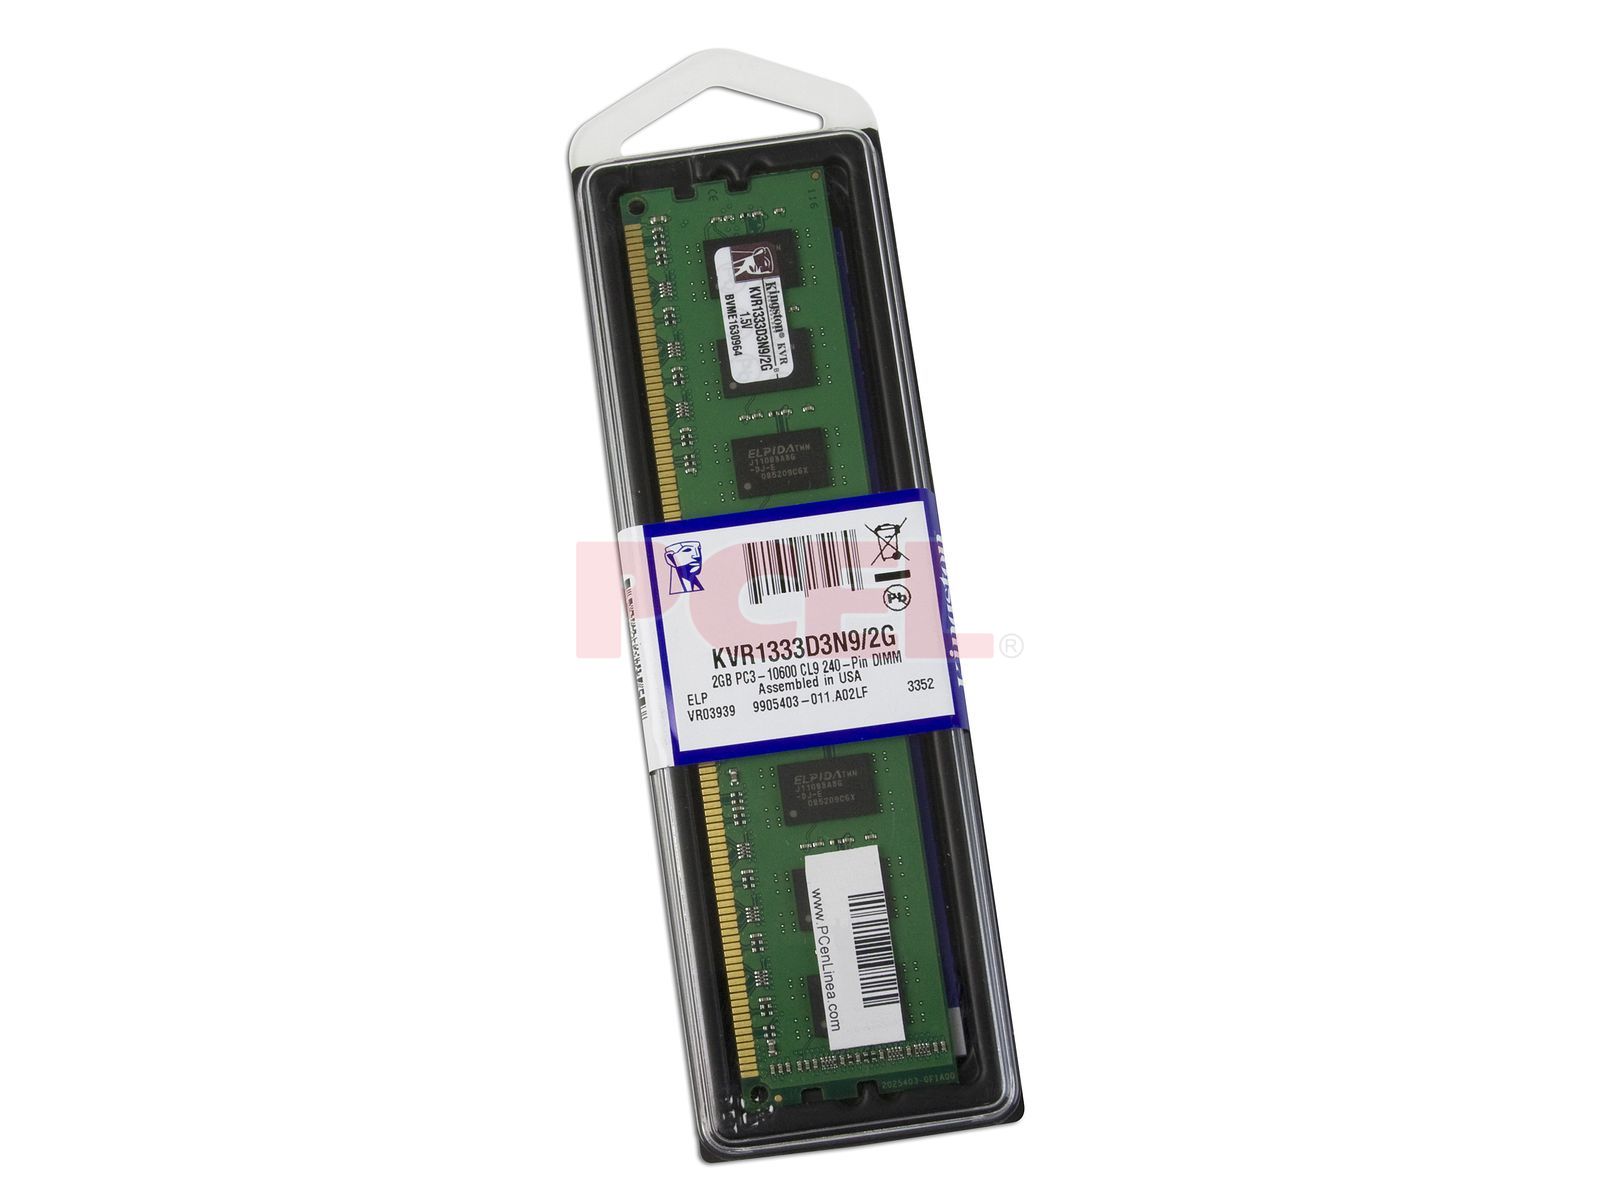 Ram Barrette Mémoire KINGSTON 2Go DDR3 PC3-10600U KVR1333D3N9/2G